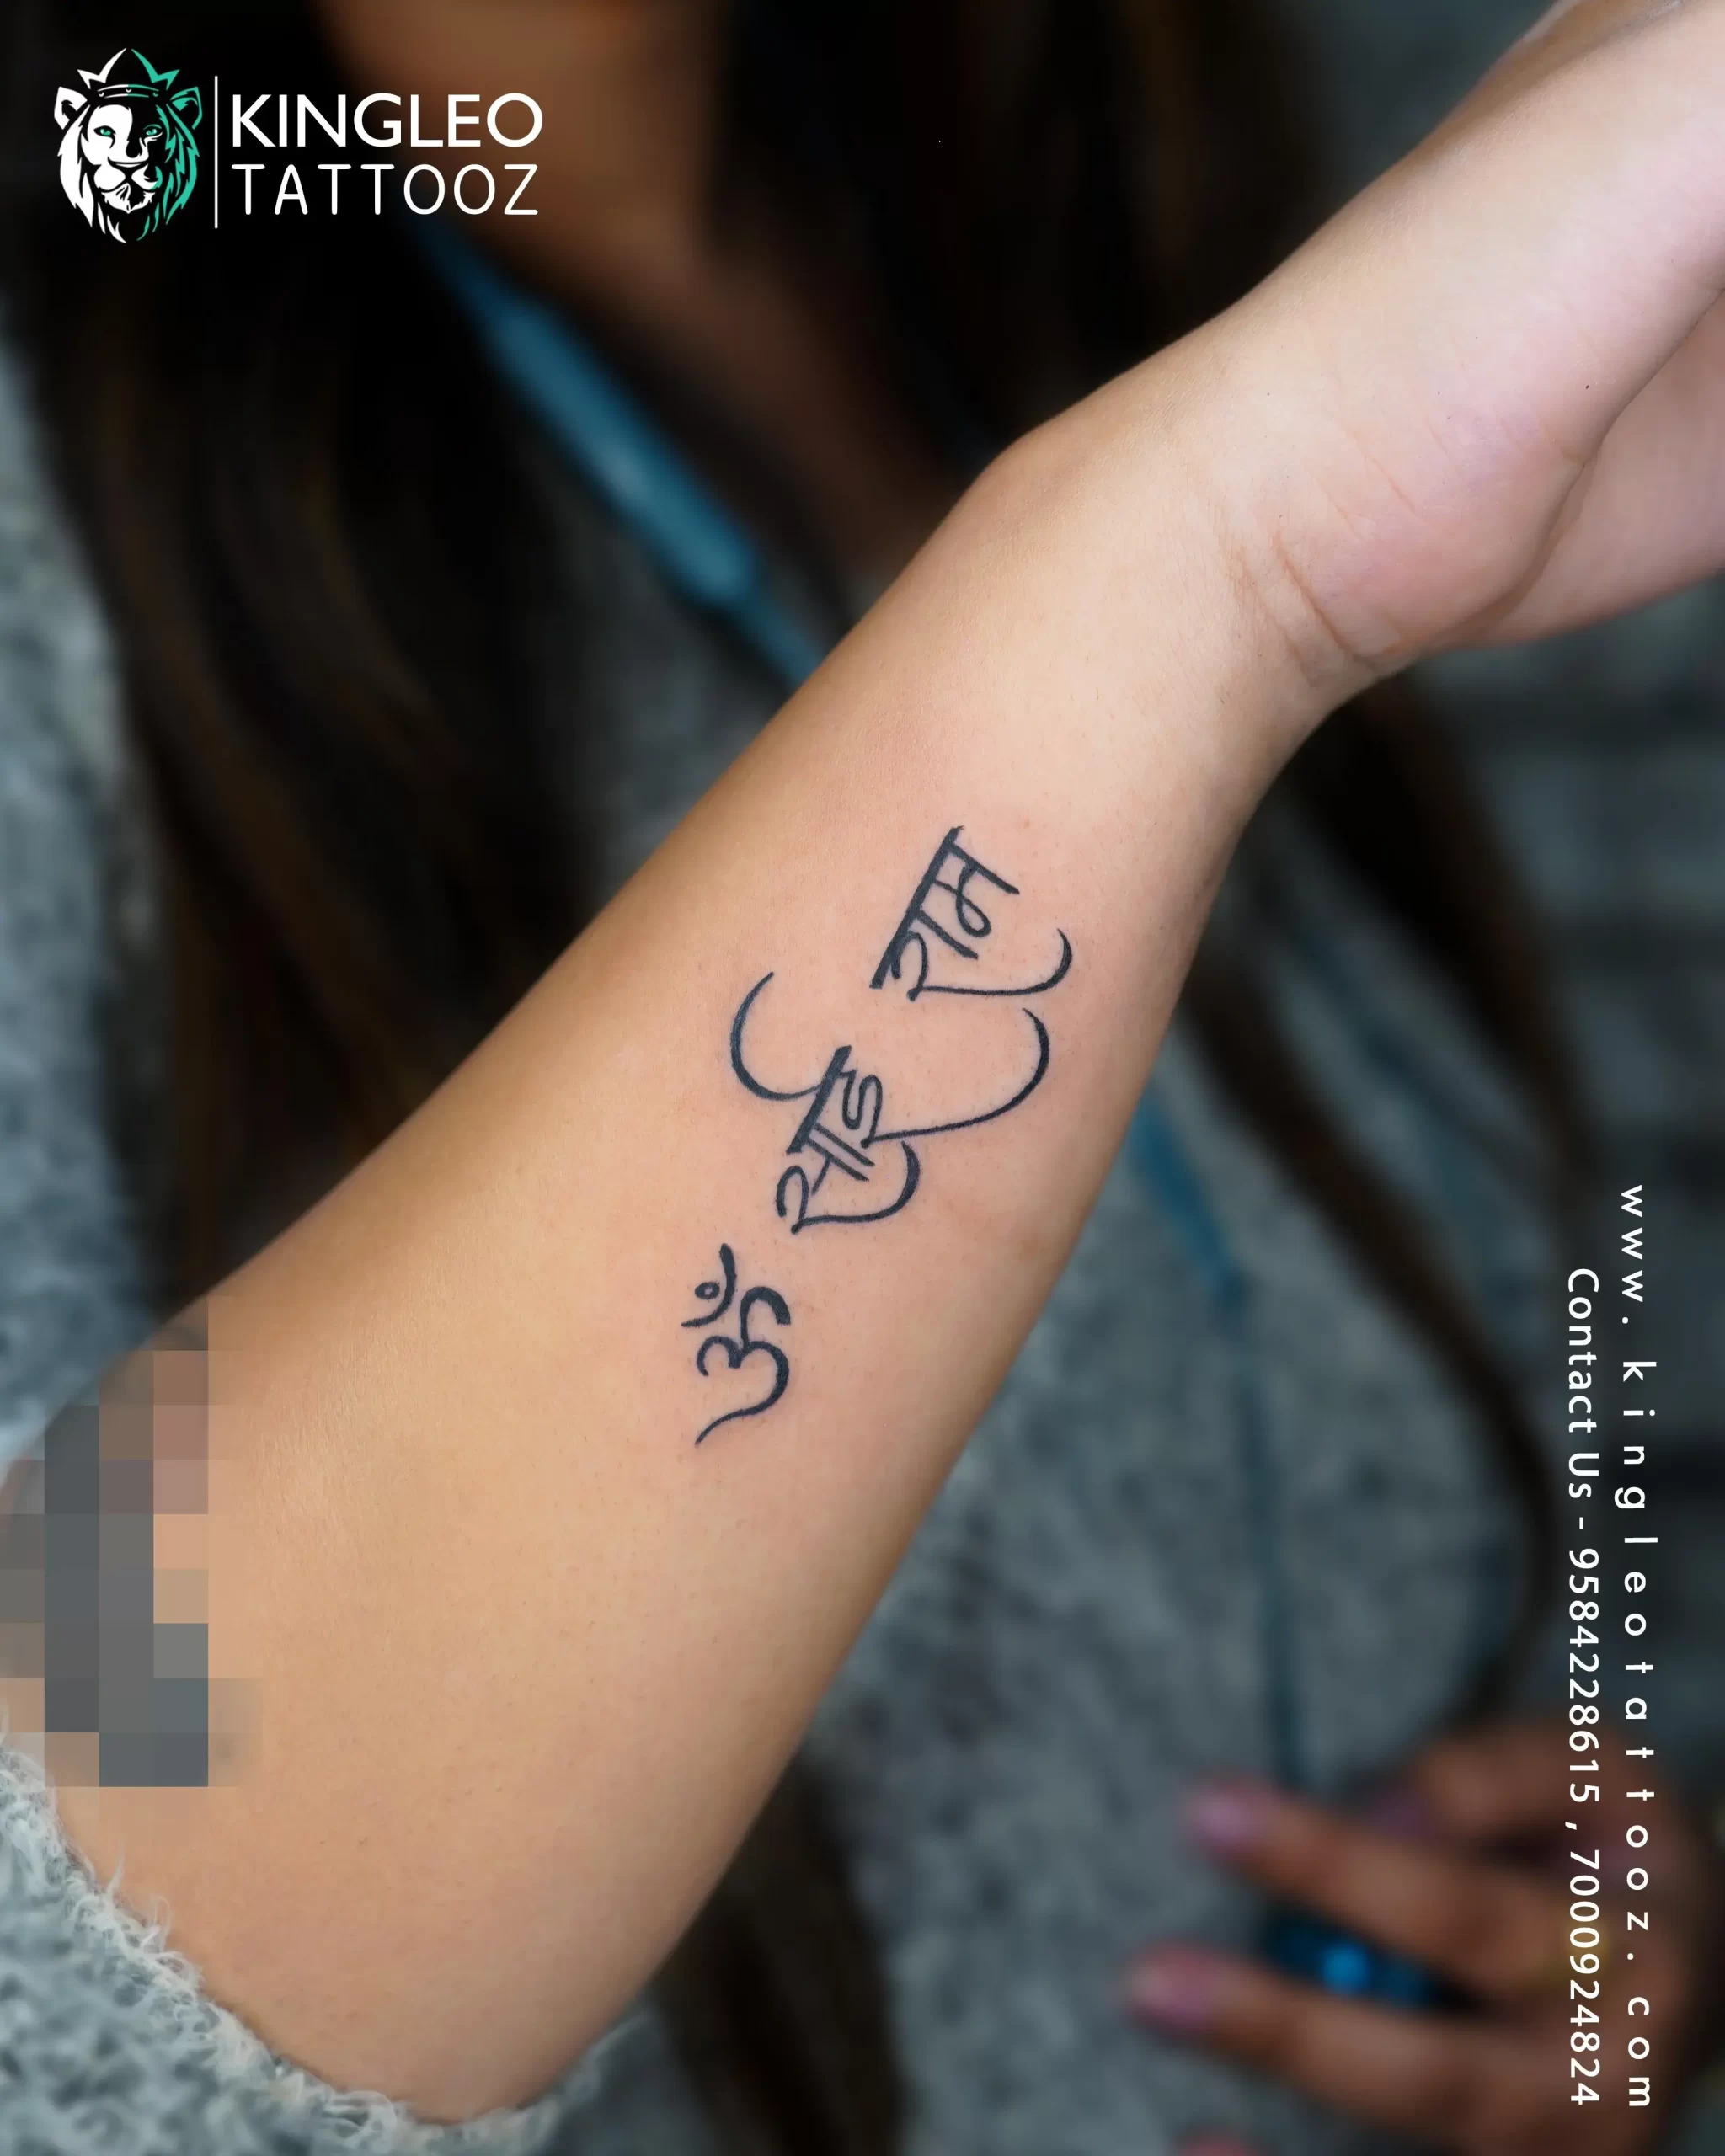 Tattoos ‪#‎Ink‬ ‪#‎Maa‬ ‪#Hindi‬ ‪#calligraphy‬ ‪#‎small‬ at Immortal  Creative Tattoo Studio ‪#‎Indore‬ ‪… | Creative tattoos, Tattoo studio,  Design your tattoo‬